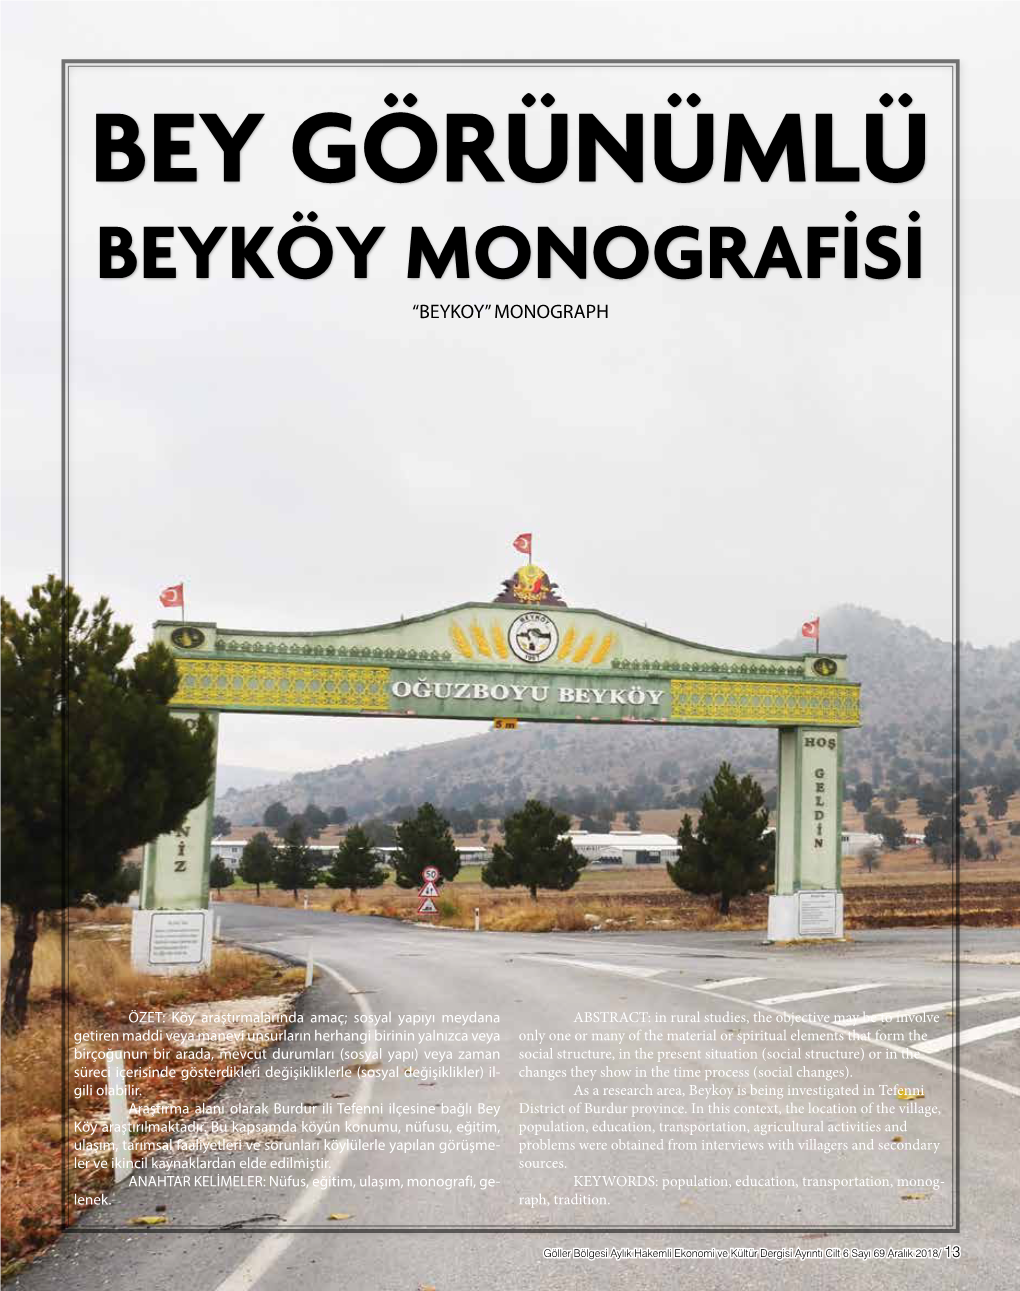 Beyköy Monografisi “Beykoy” Monograph